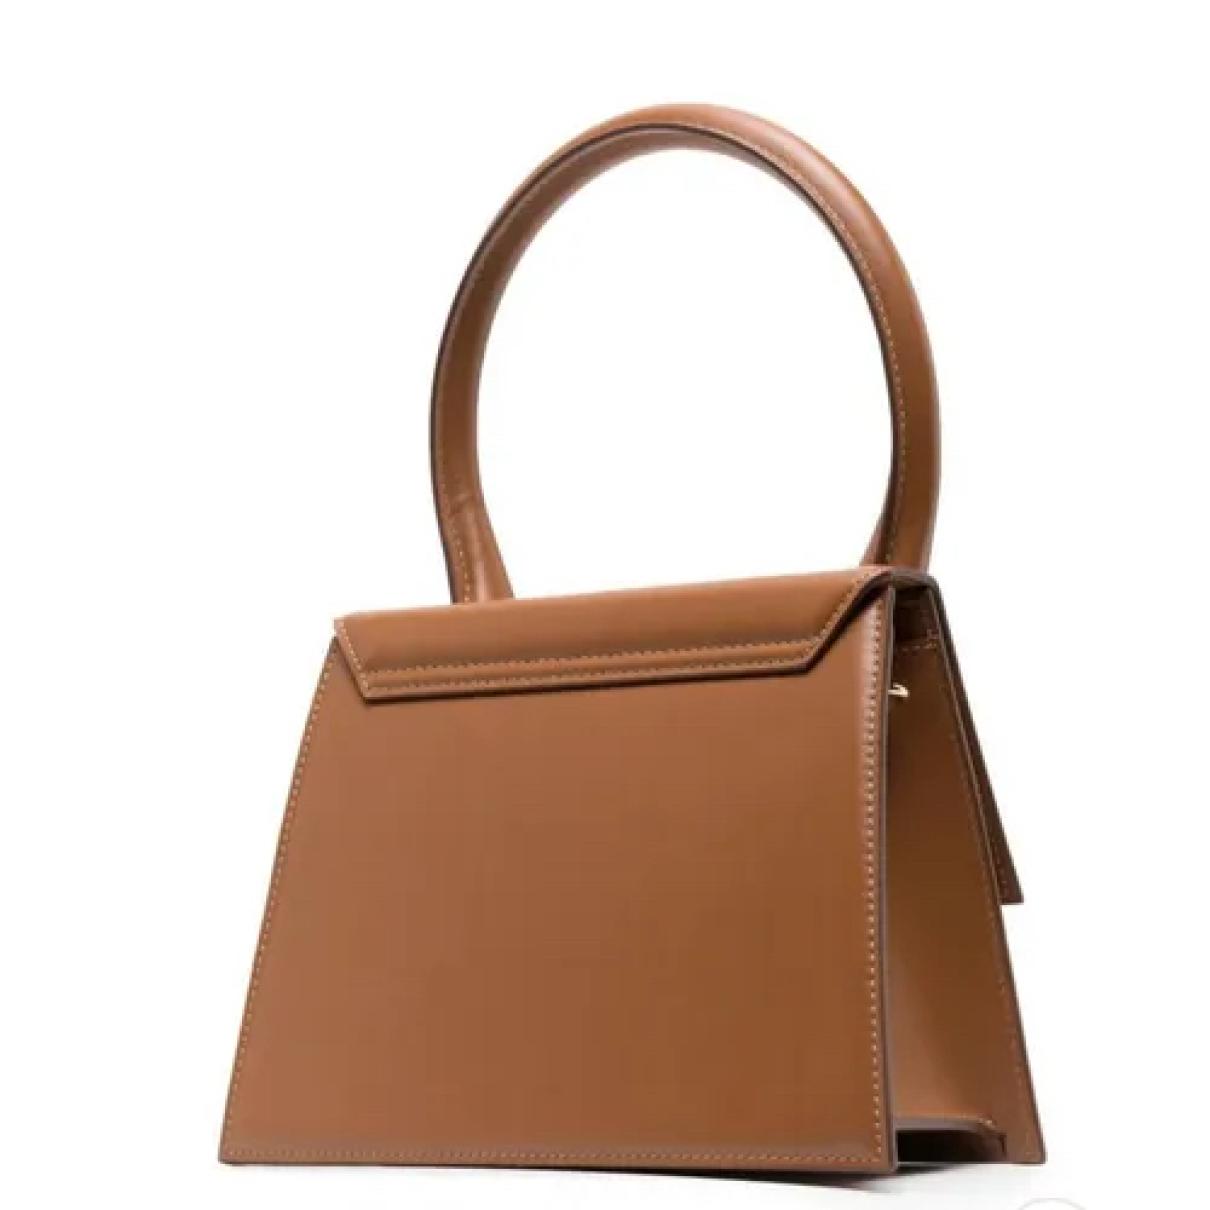 Chiquito leather handbag - 3